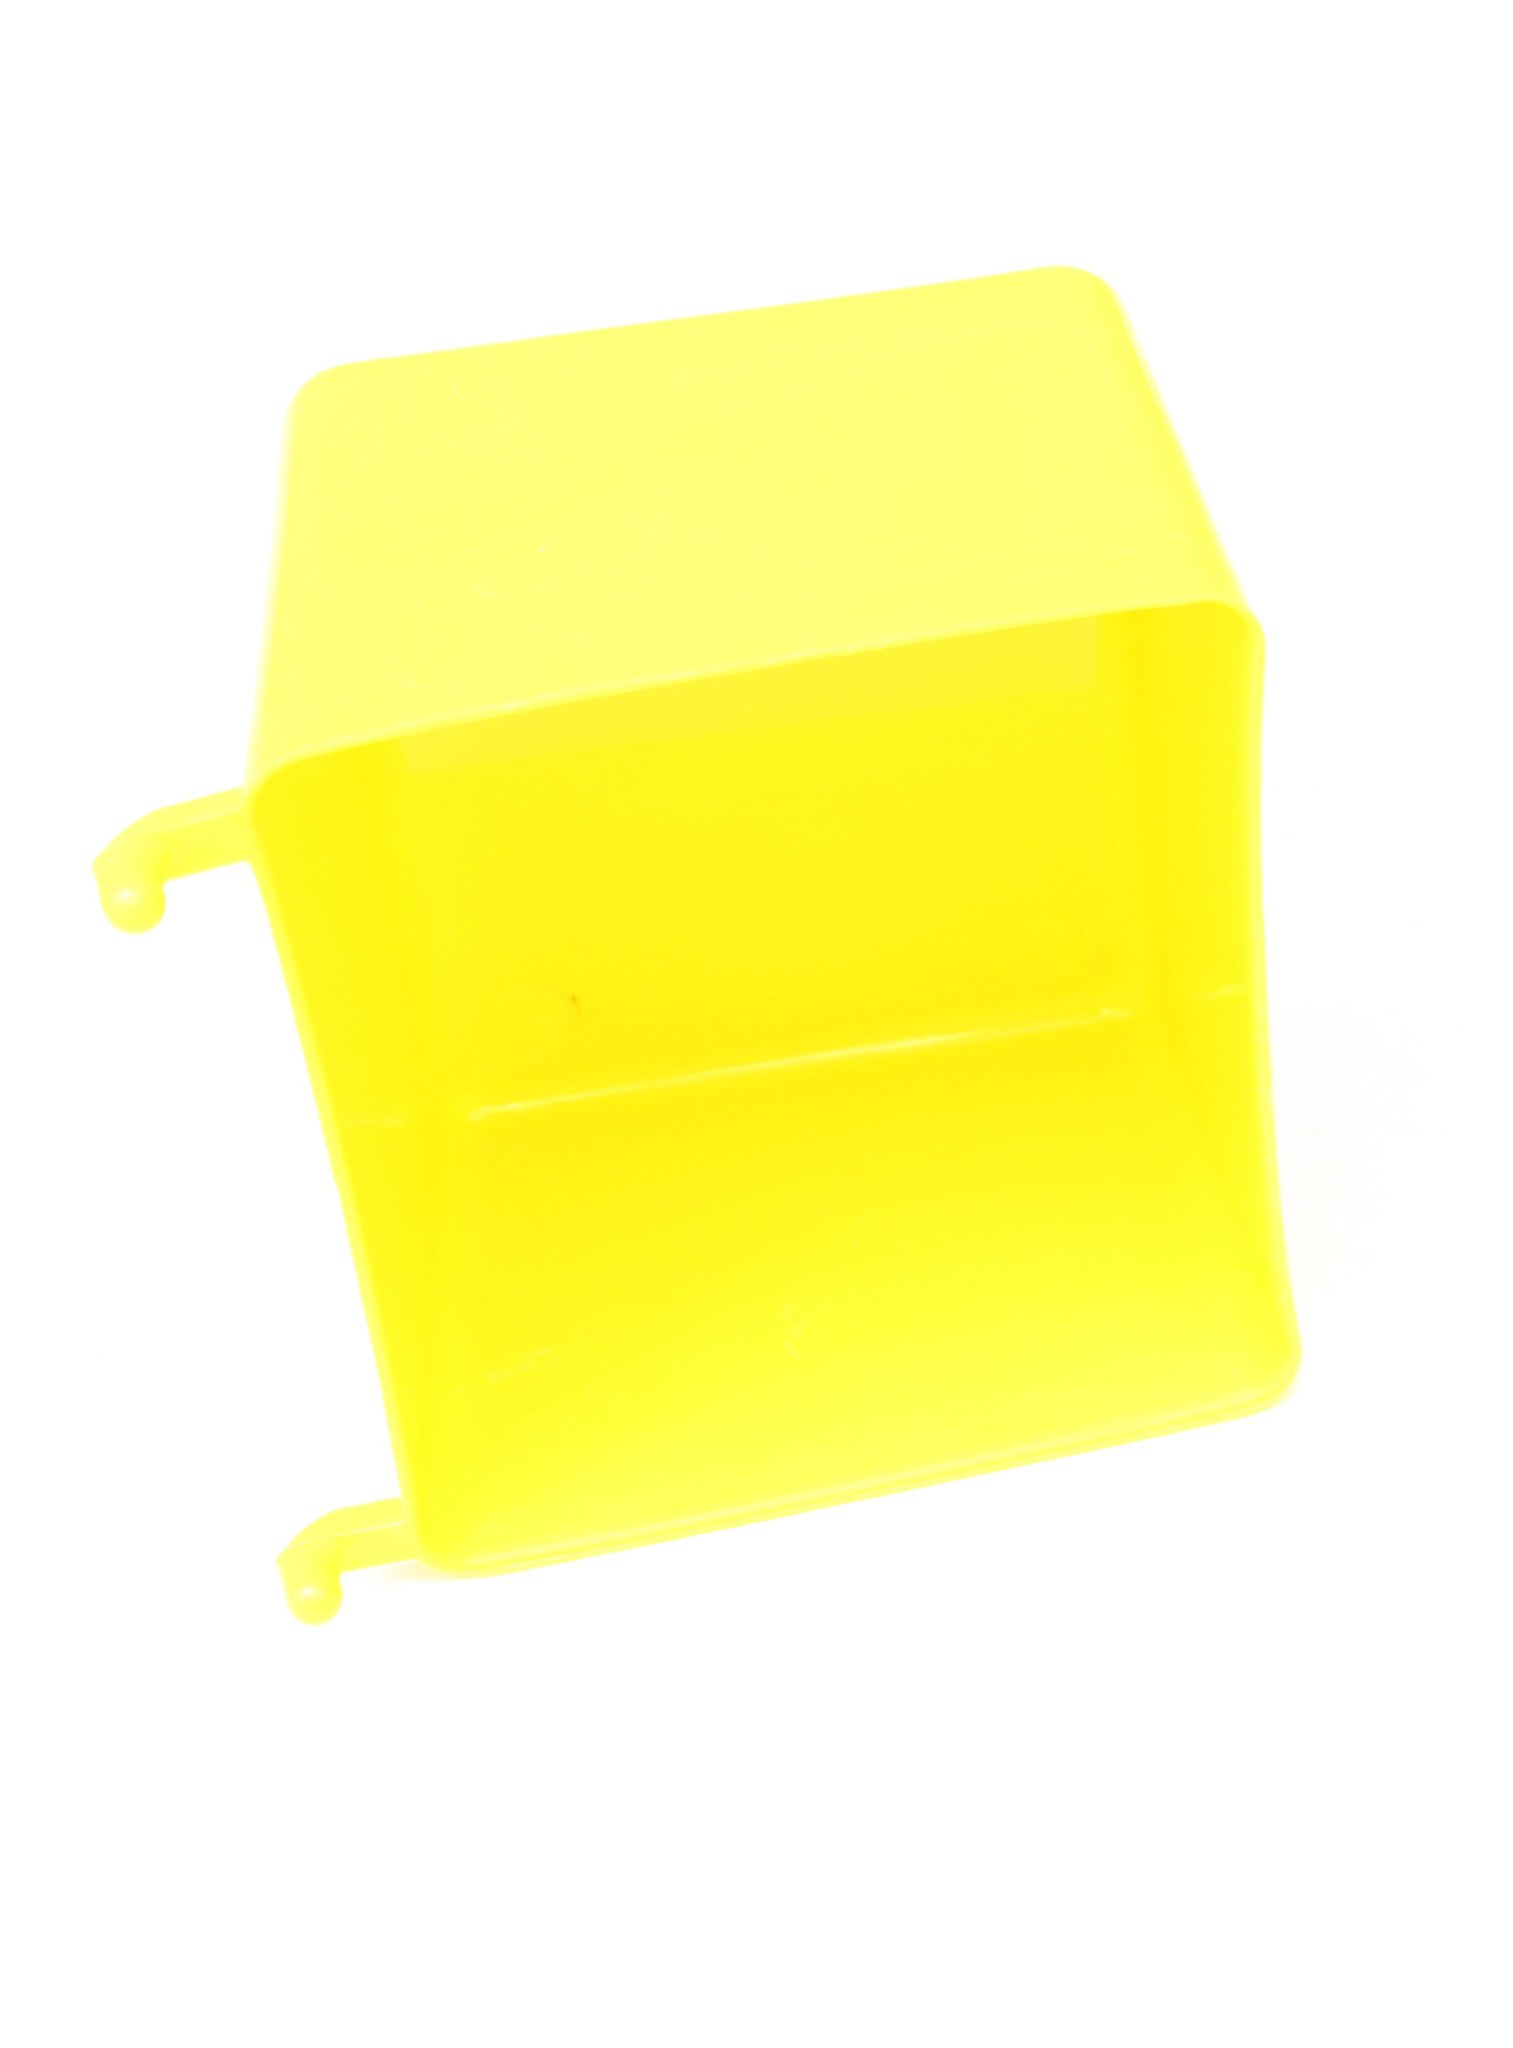 PEG BOARD Yellow Plastic Part Bins Hooks to Peg Tool Board ...